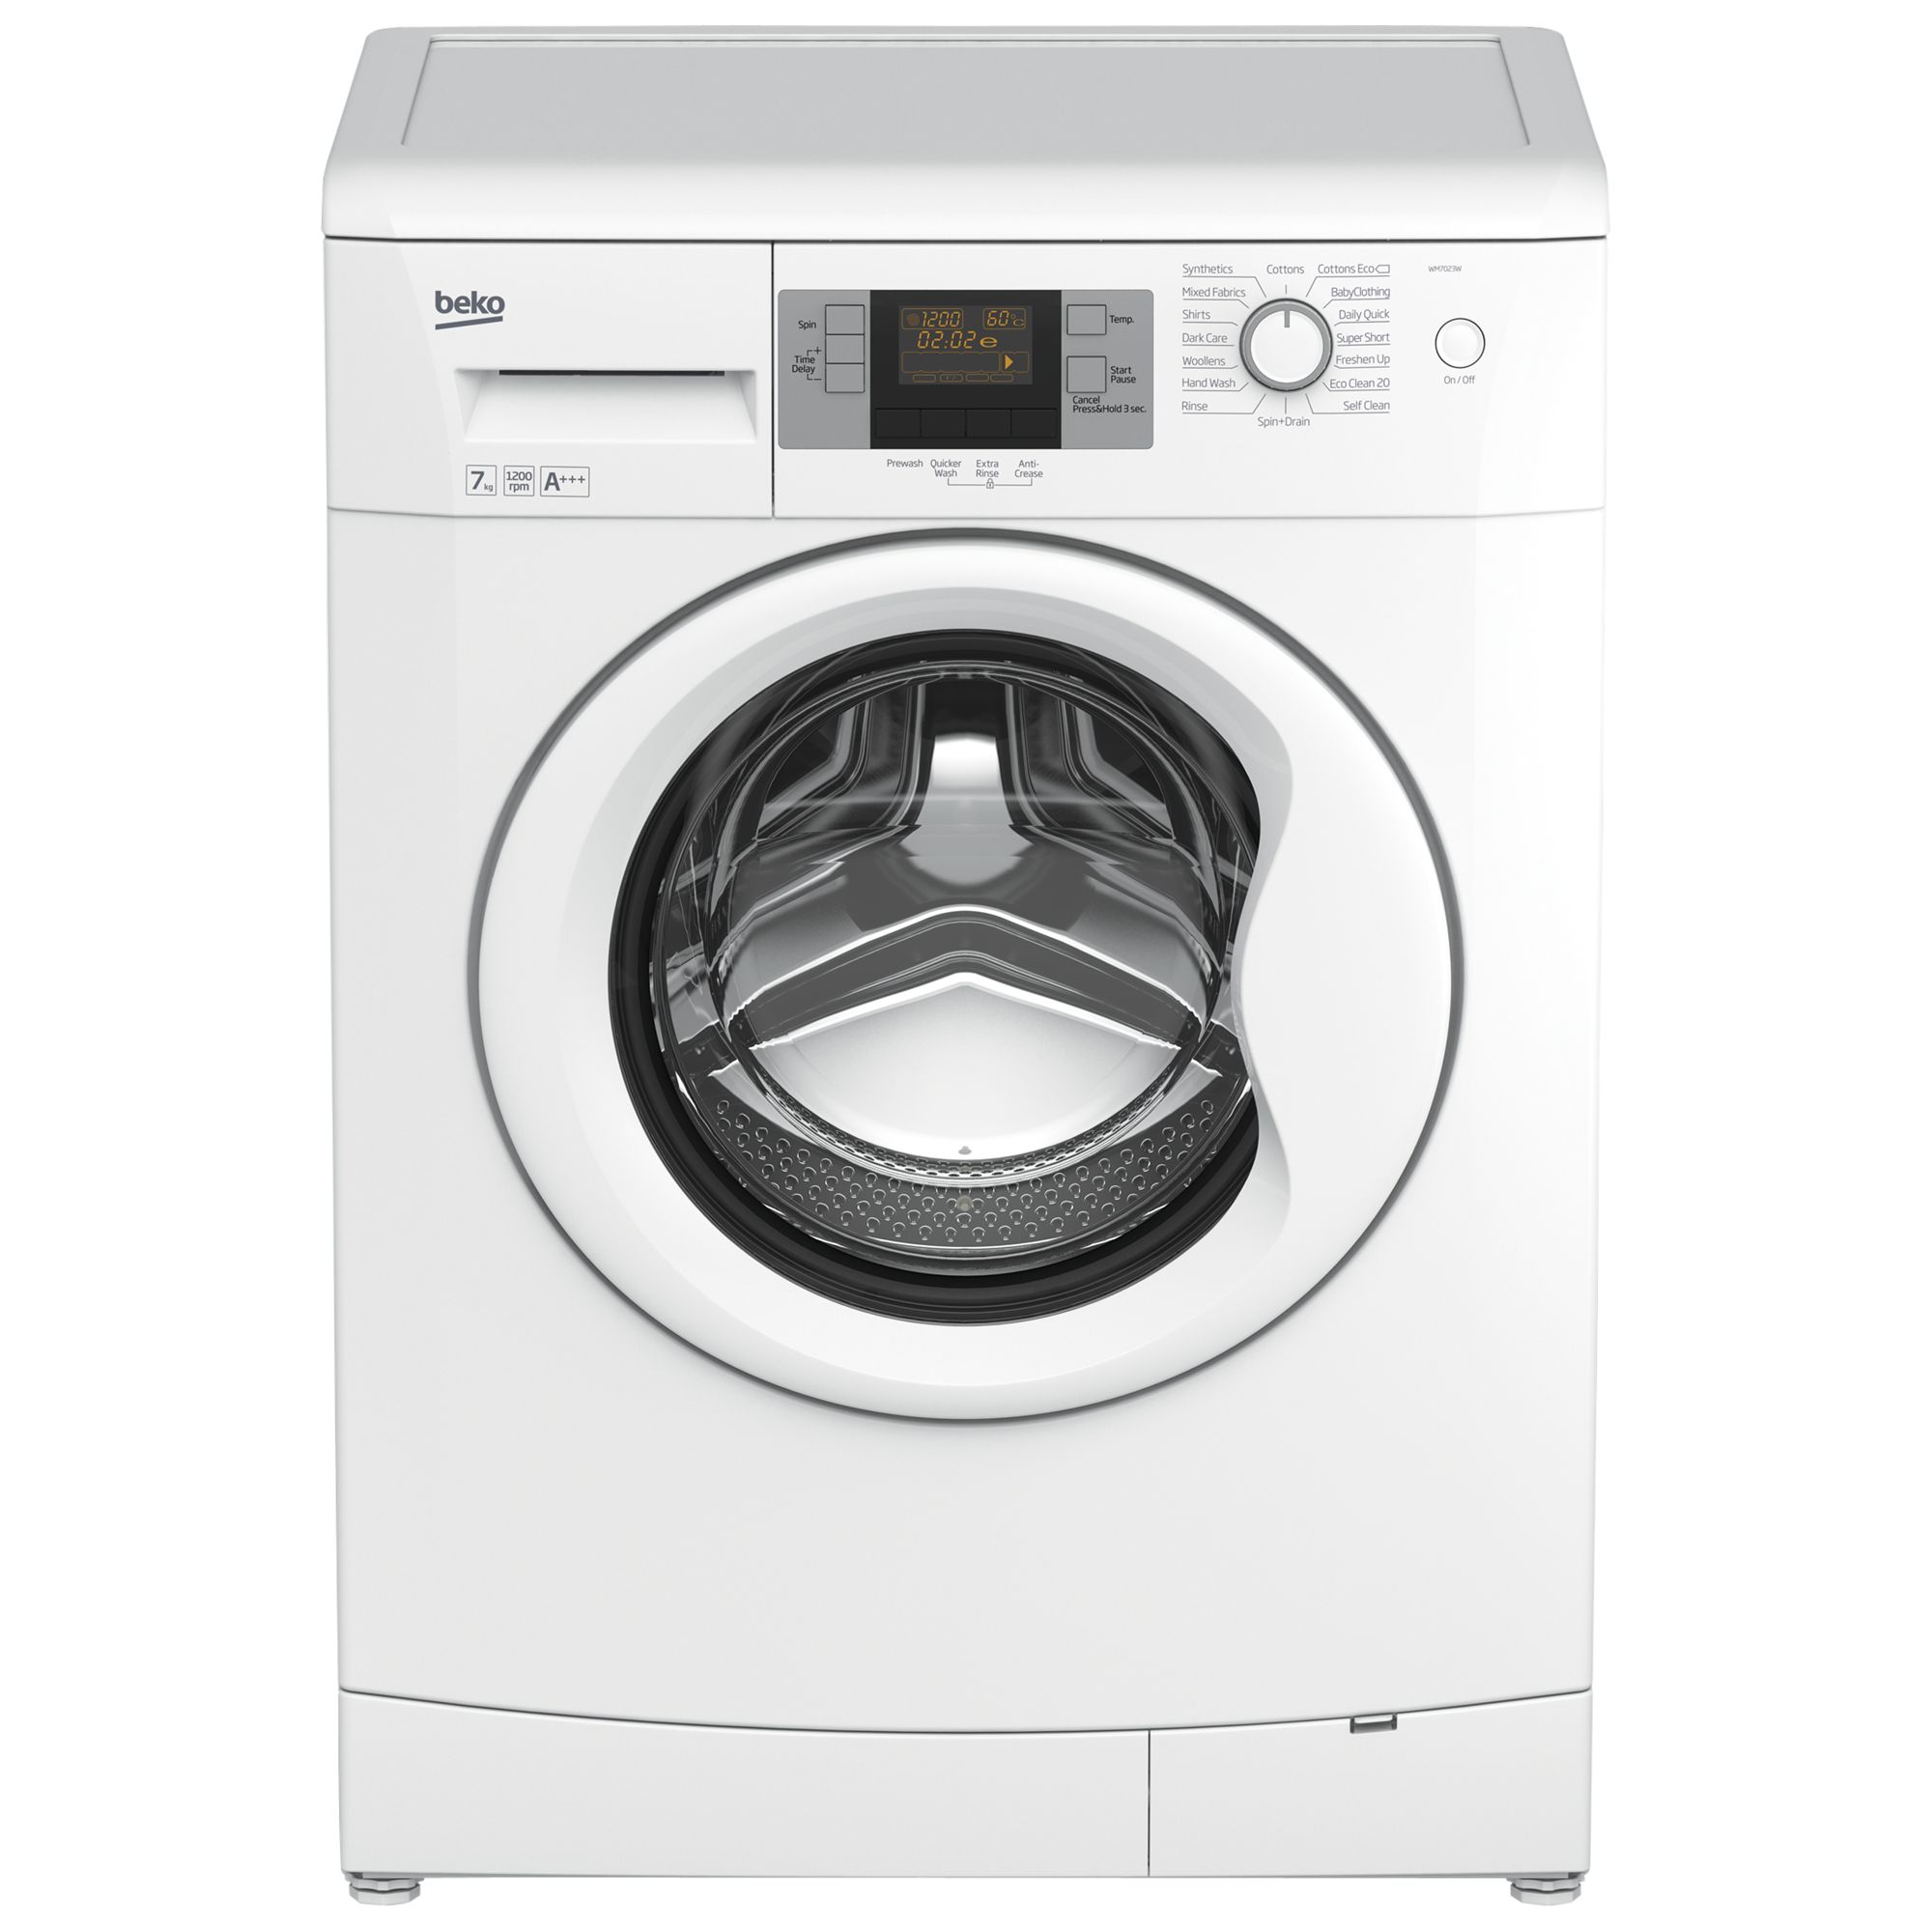 Beko WM7023W Slim Depth Freestanding Washing Machine, 7kg Load, A+++ Energy Rating, 1200rpm Spin, White